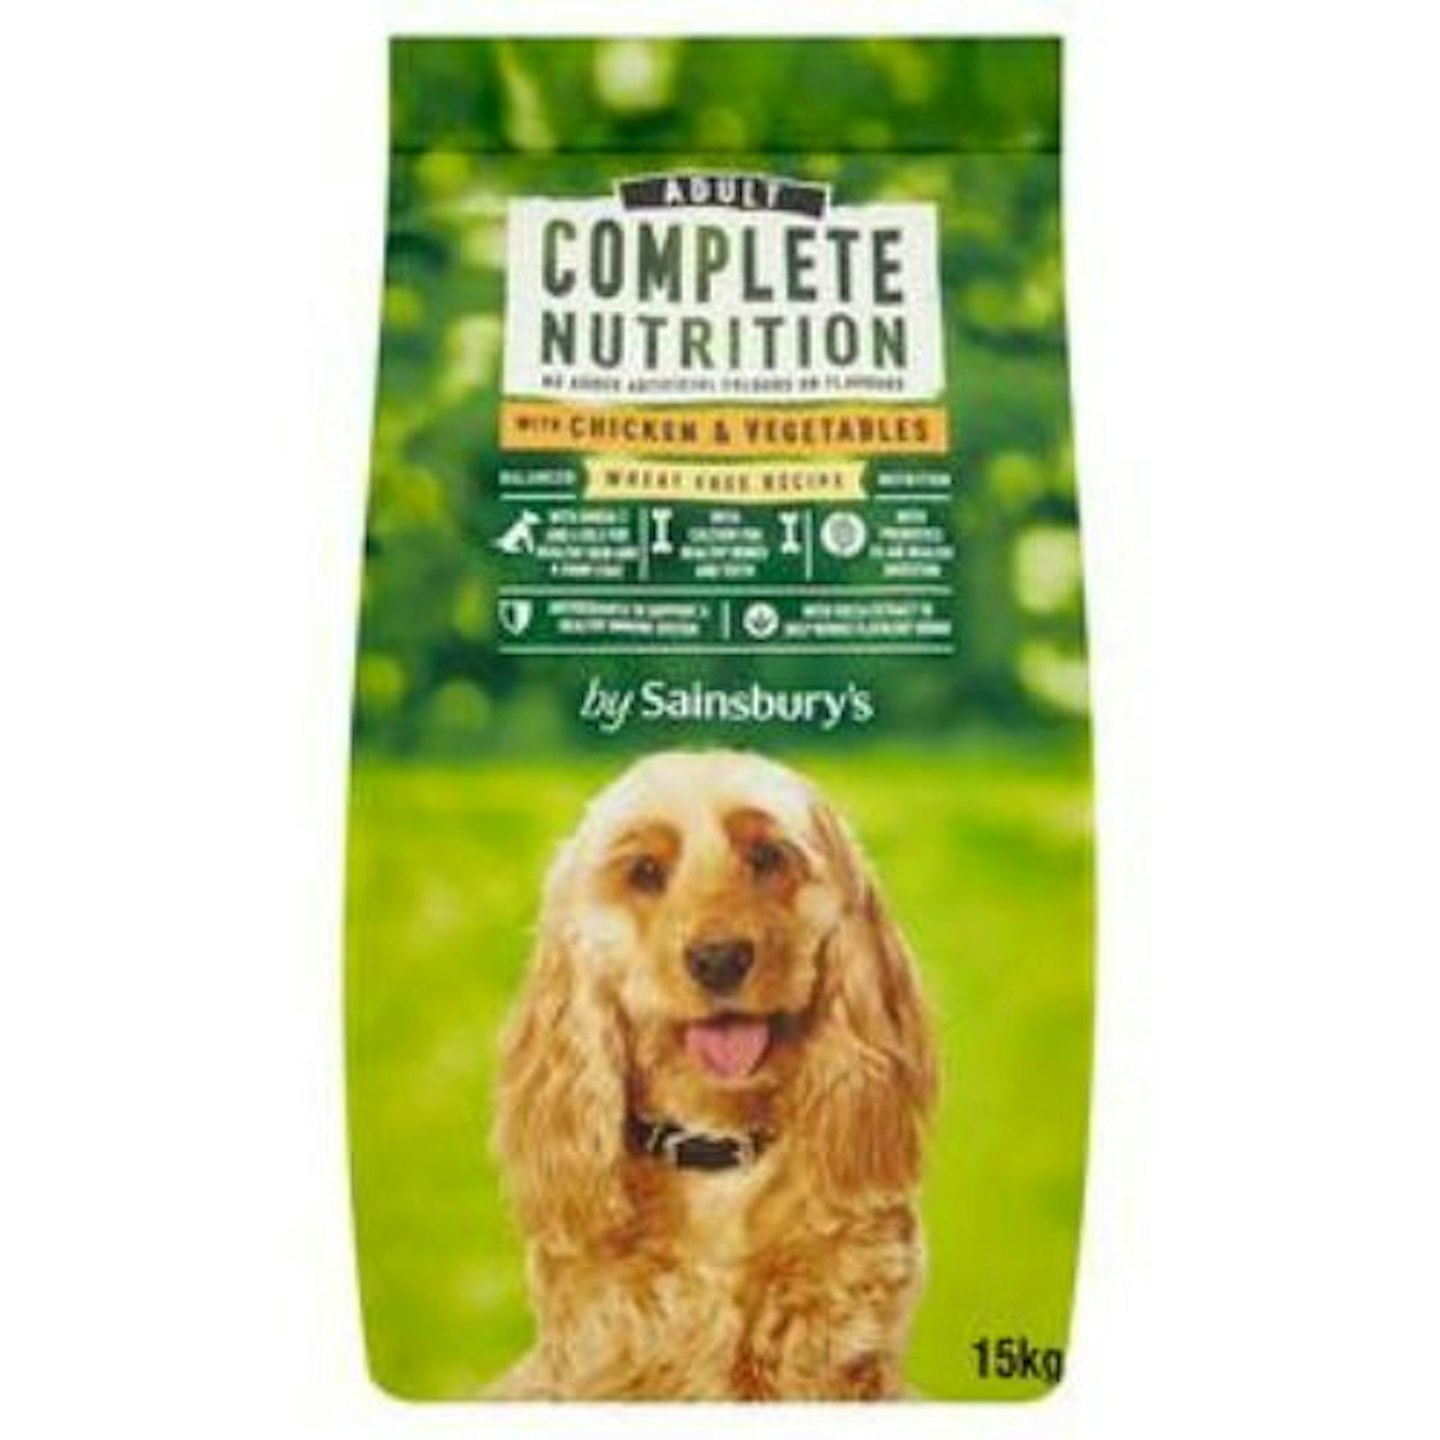 Sainsbury's Complete Nutrition Adult Dog Food